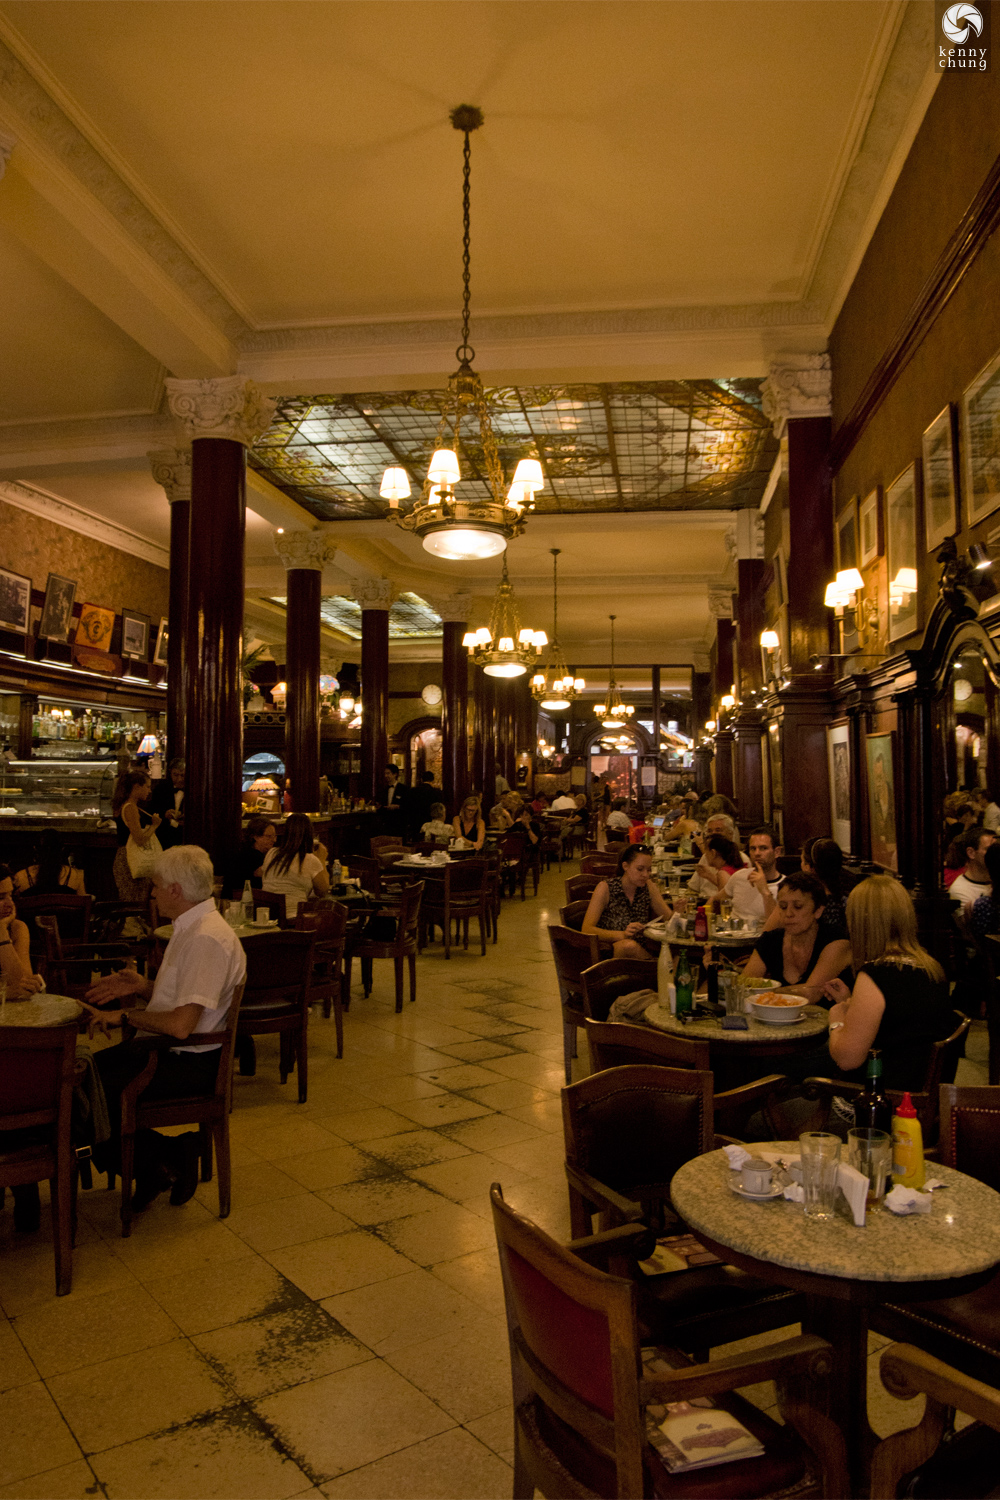 Interior shot of Cafe Tortoni